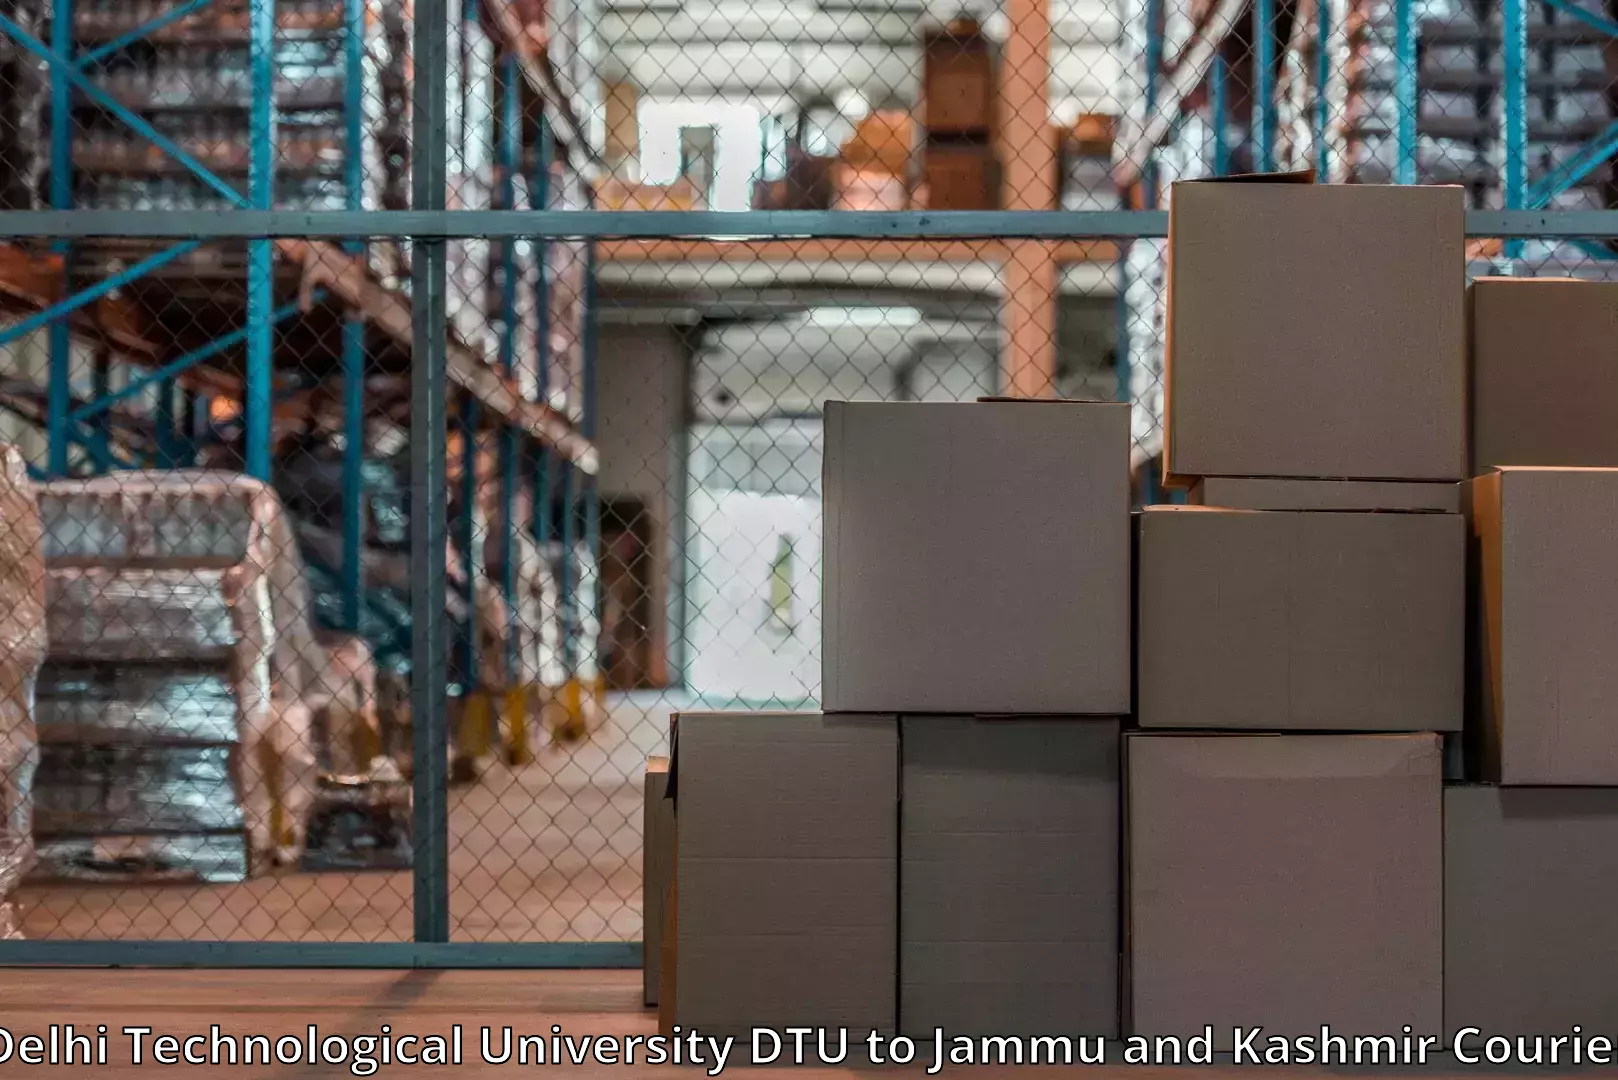 Furniture delivery service Delhi Technological University DTU to Jammu